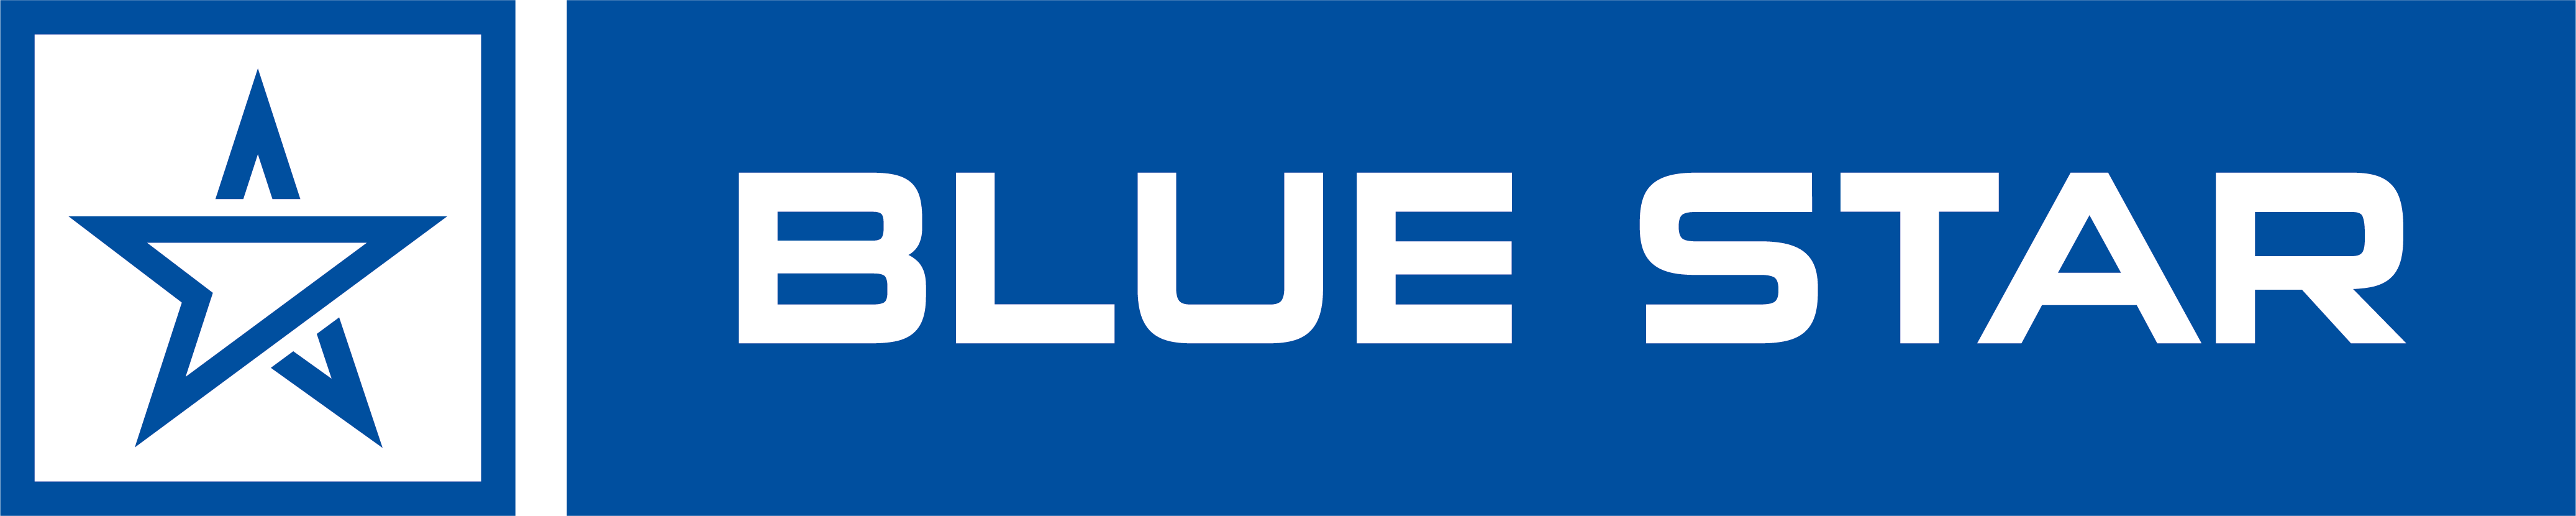 Blue Star primary logo